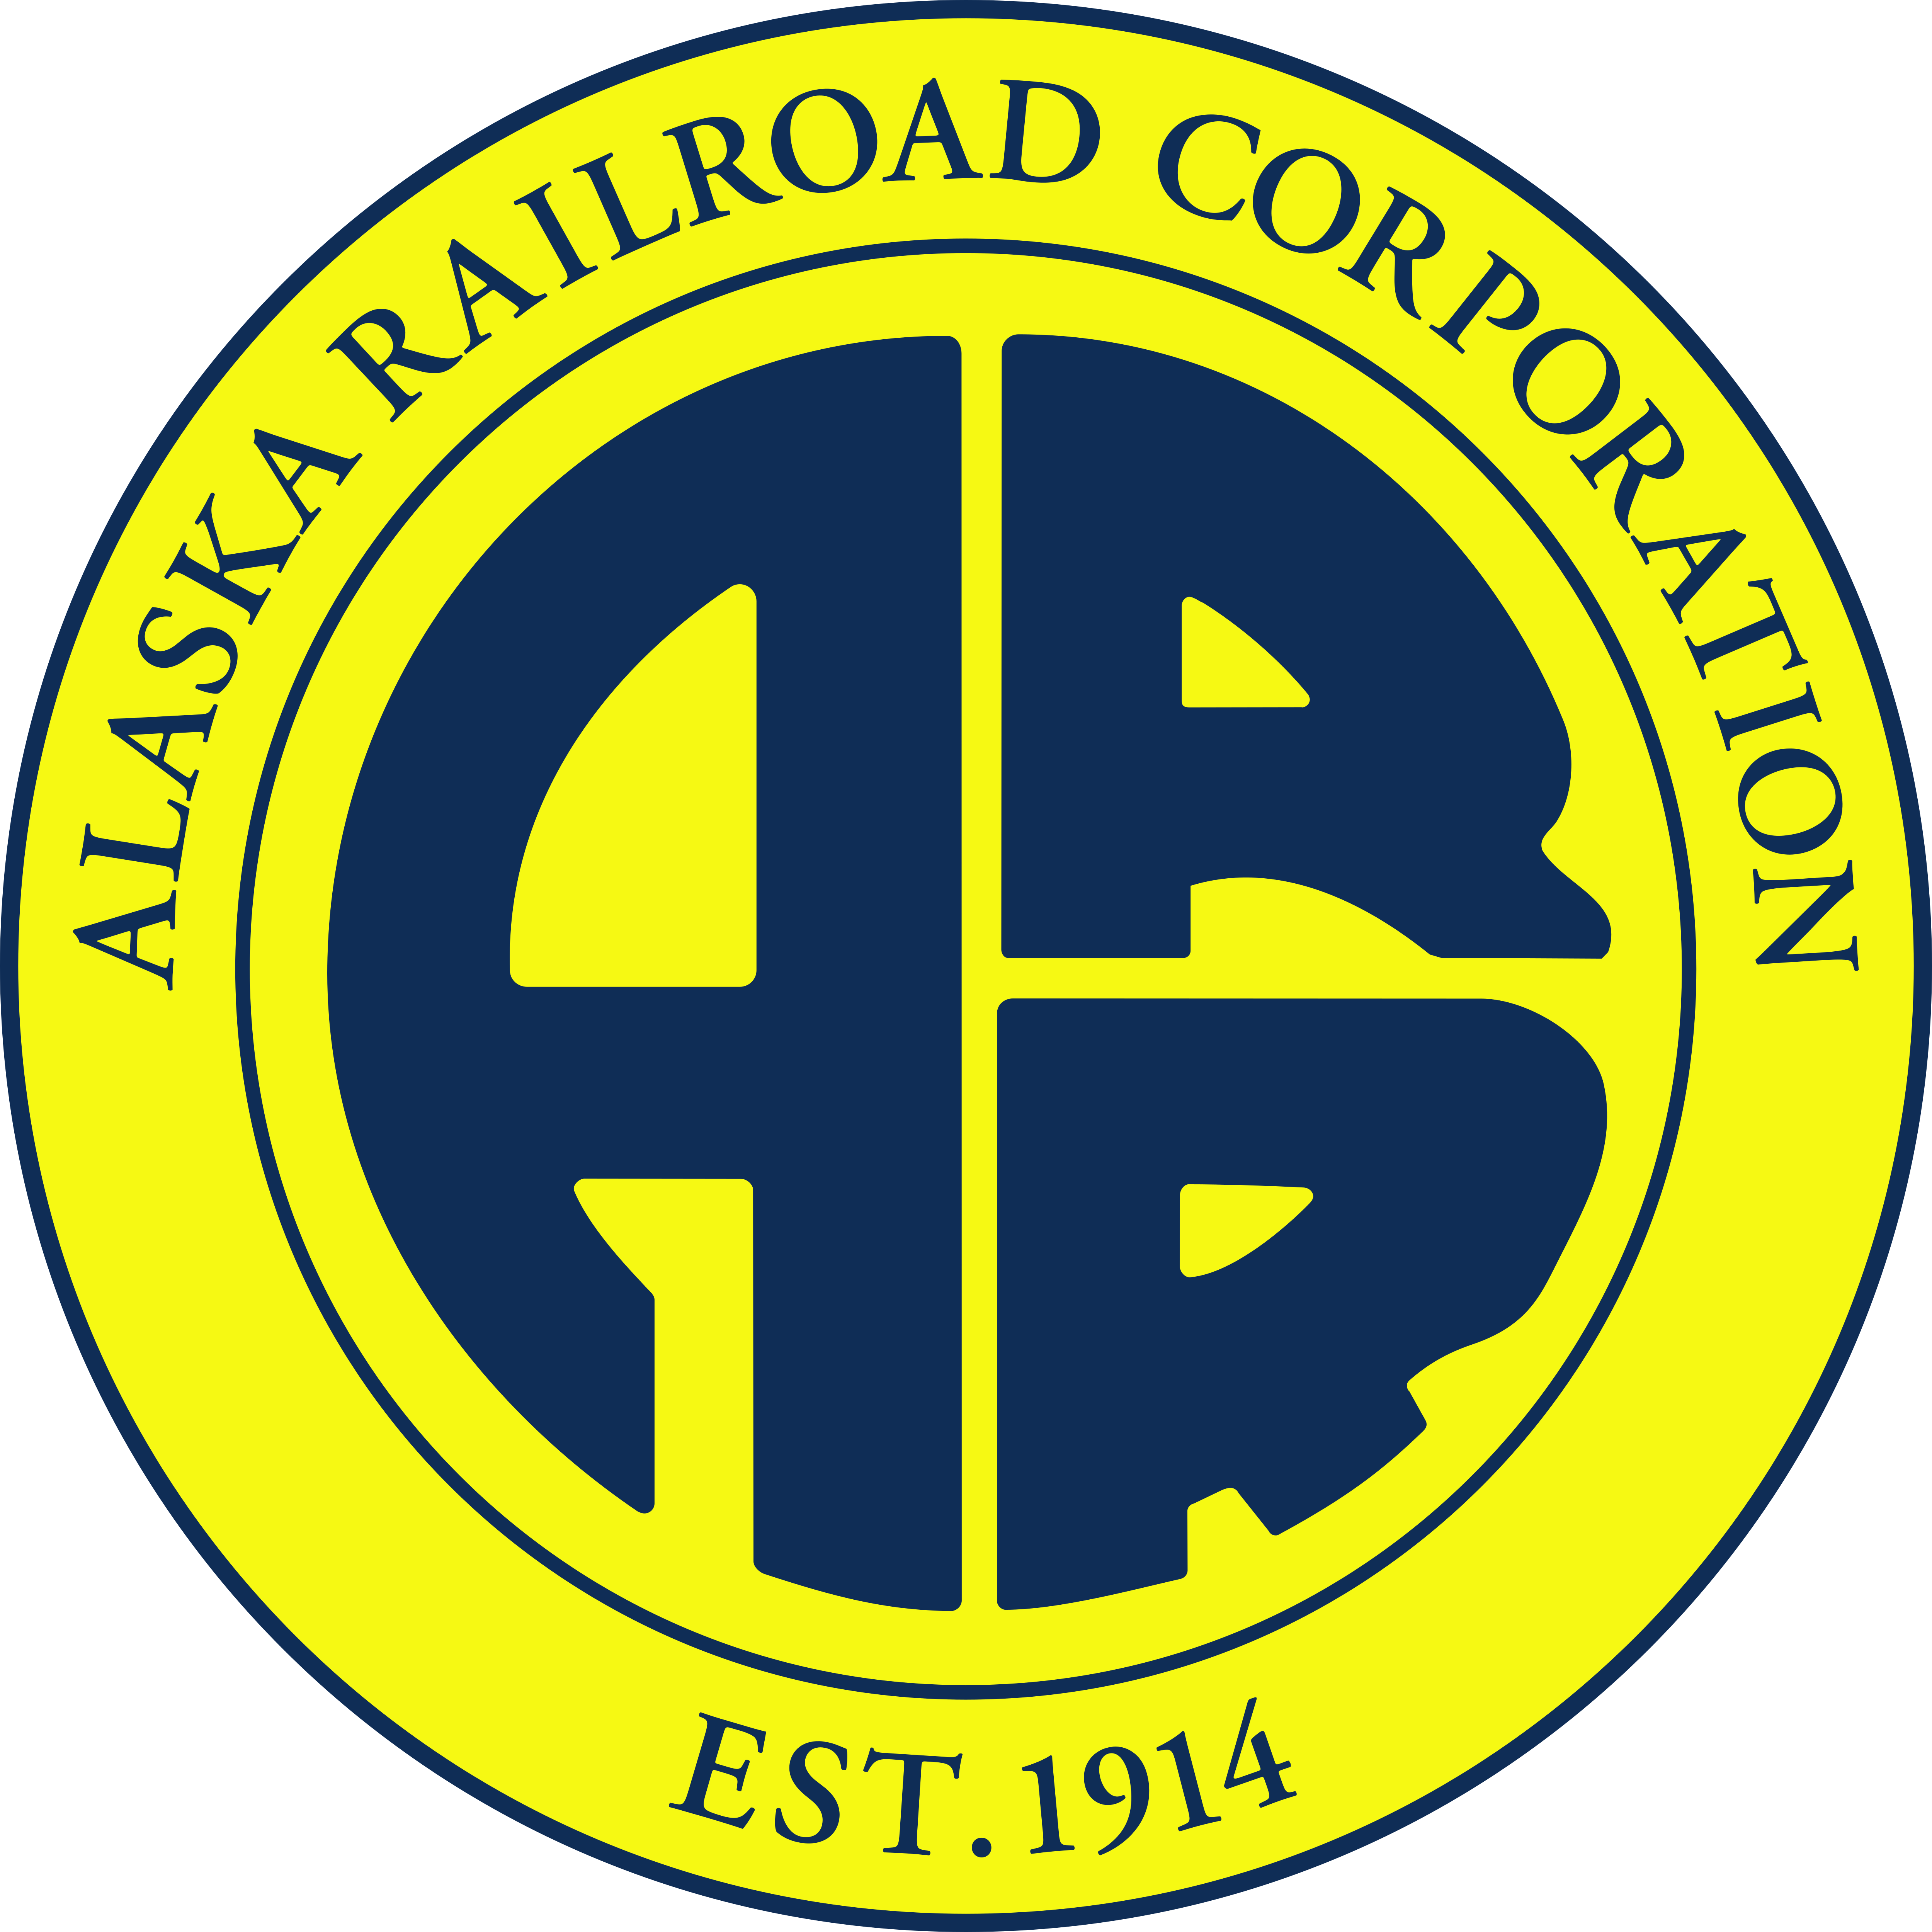 eisenbahn alaska railroad logos download